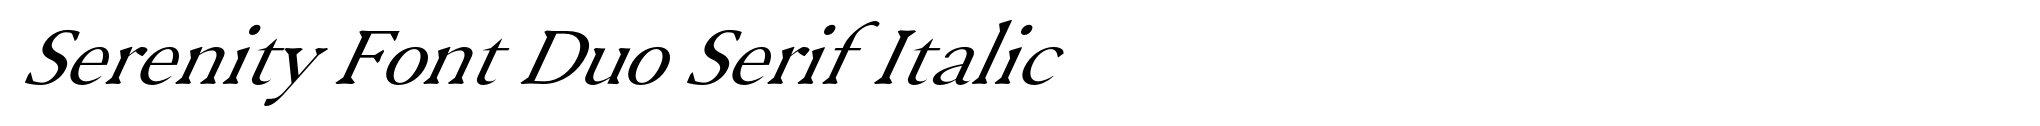 Serenity Font Duo Serif Italic image